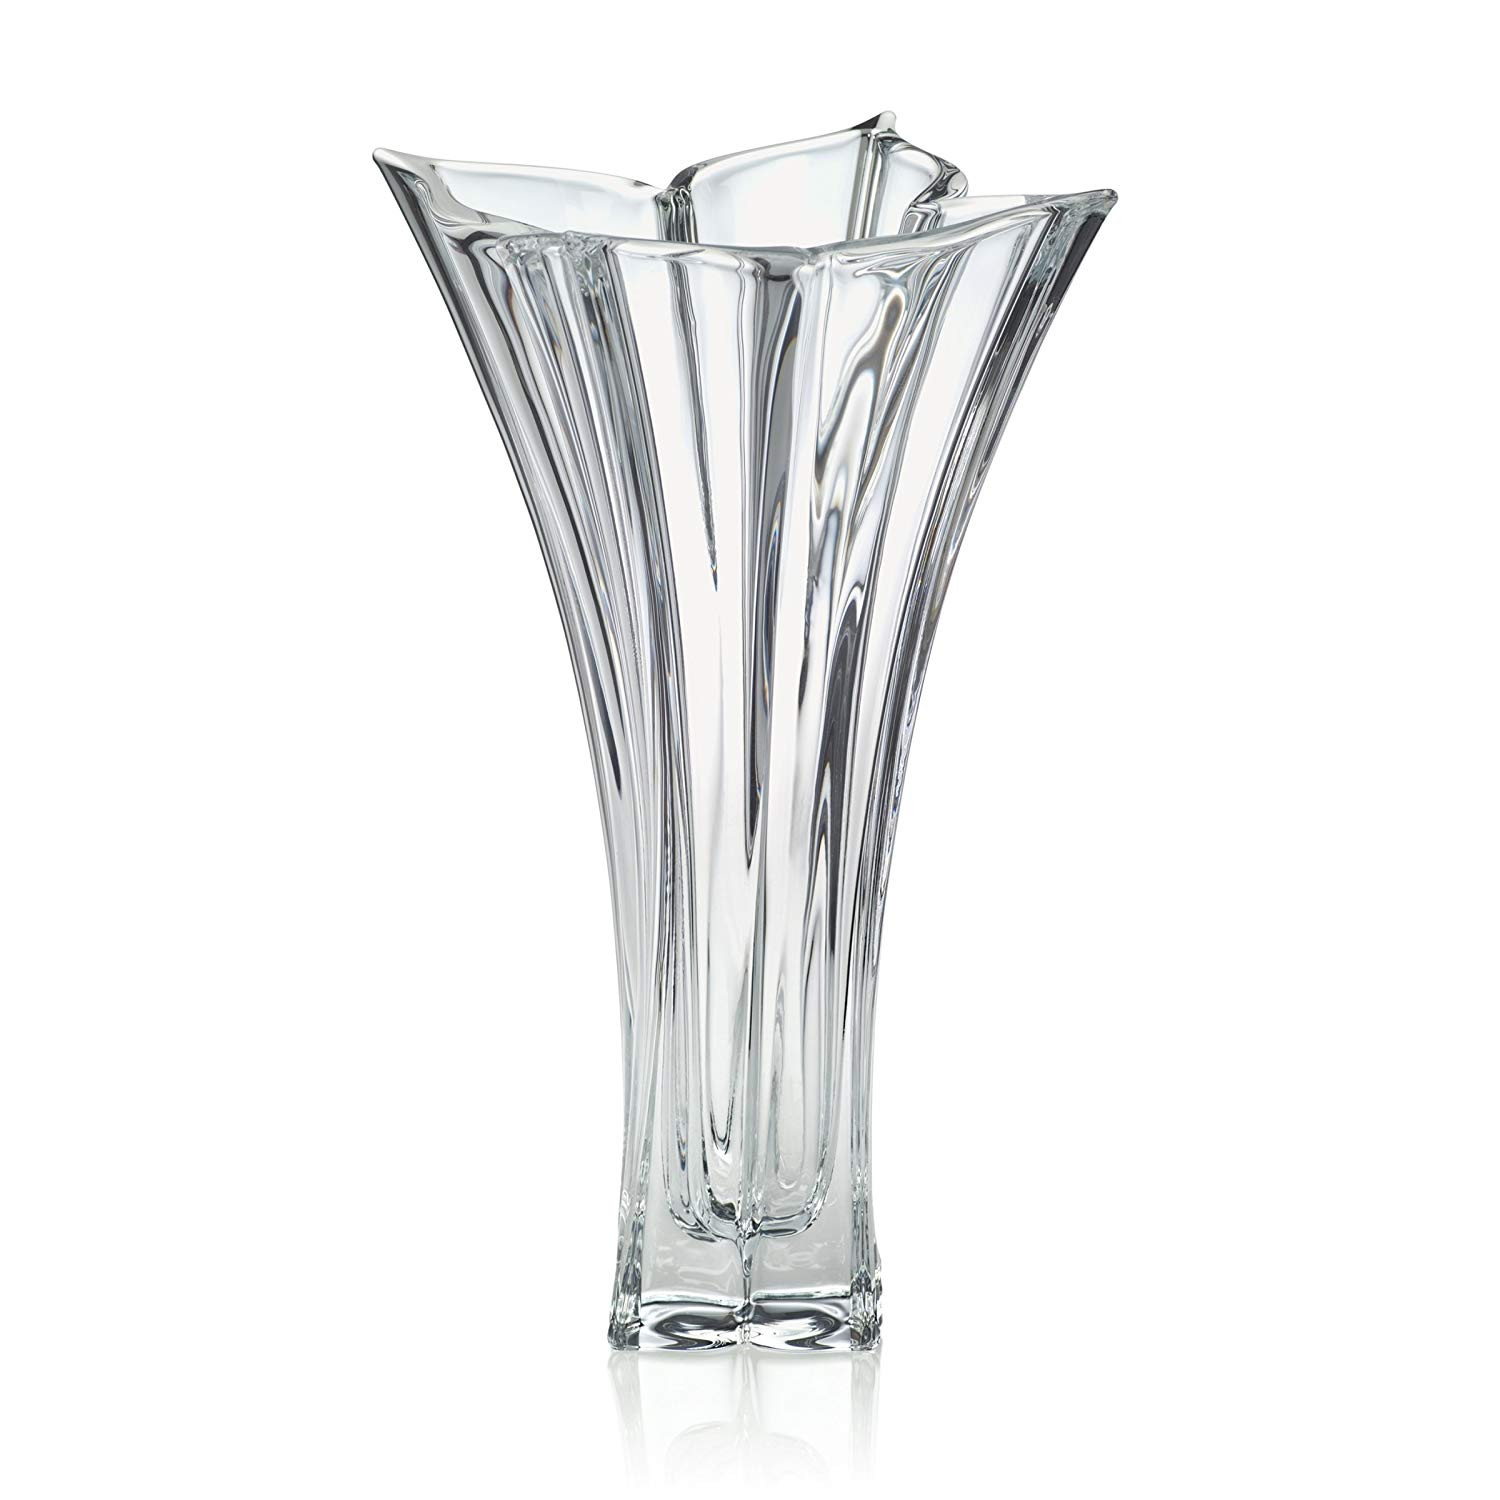 20 attractive Mikasa Florale Crystal Vase 2022 free download mikasa florale crystal vase of amazon com mikasa crystal florale crystal vase 14 inch home kitchen for 810frtzhvvl sl1500